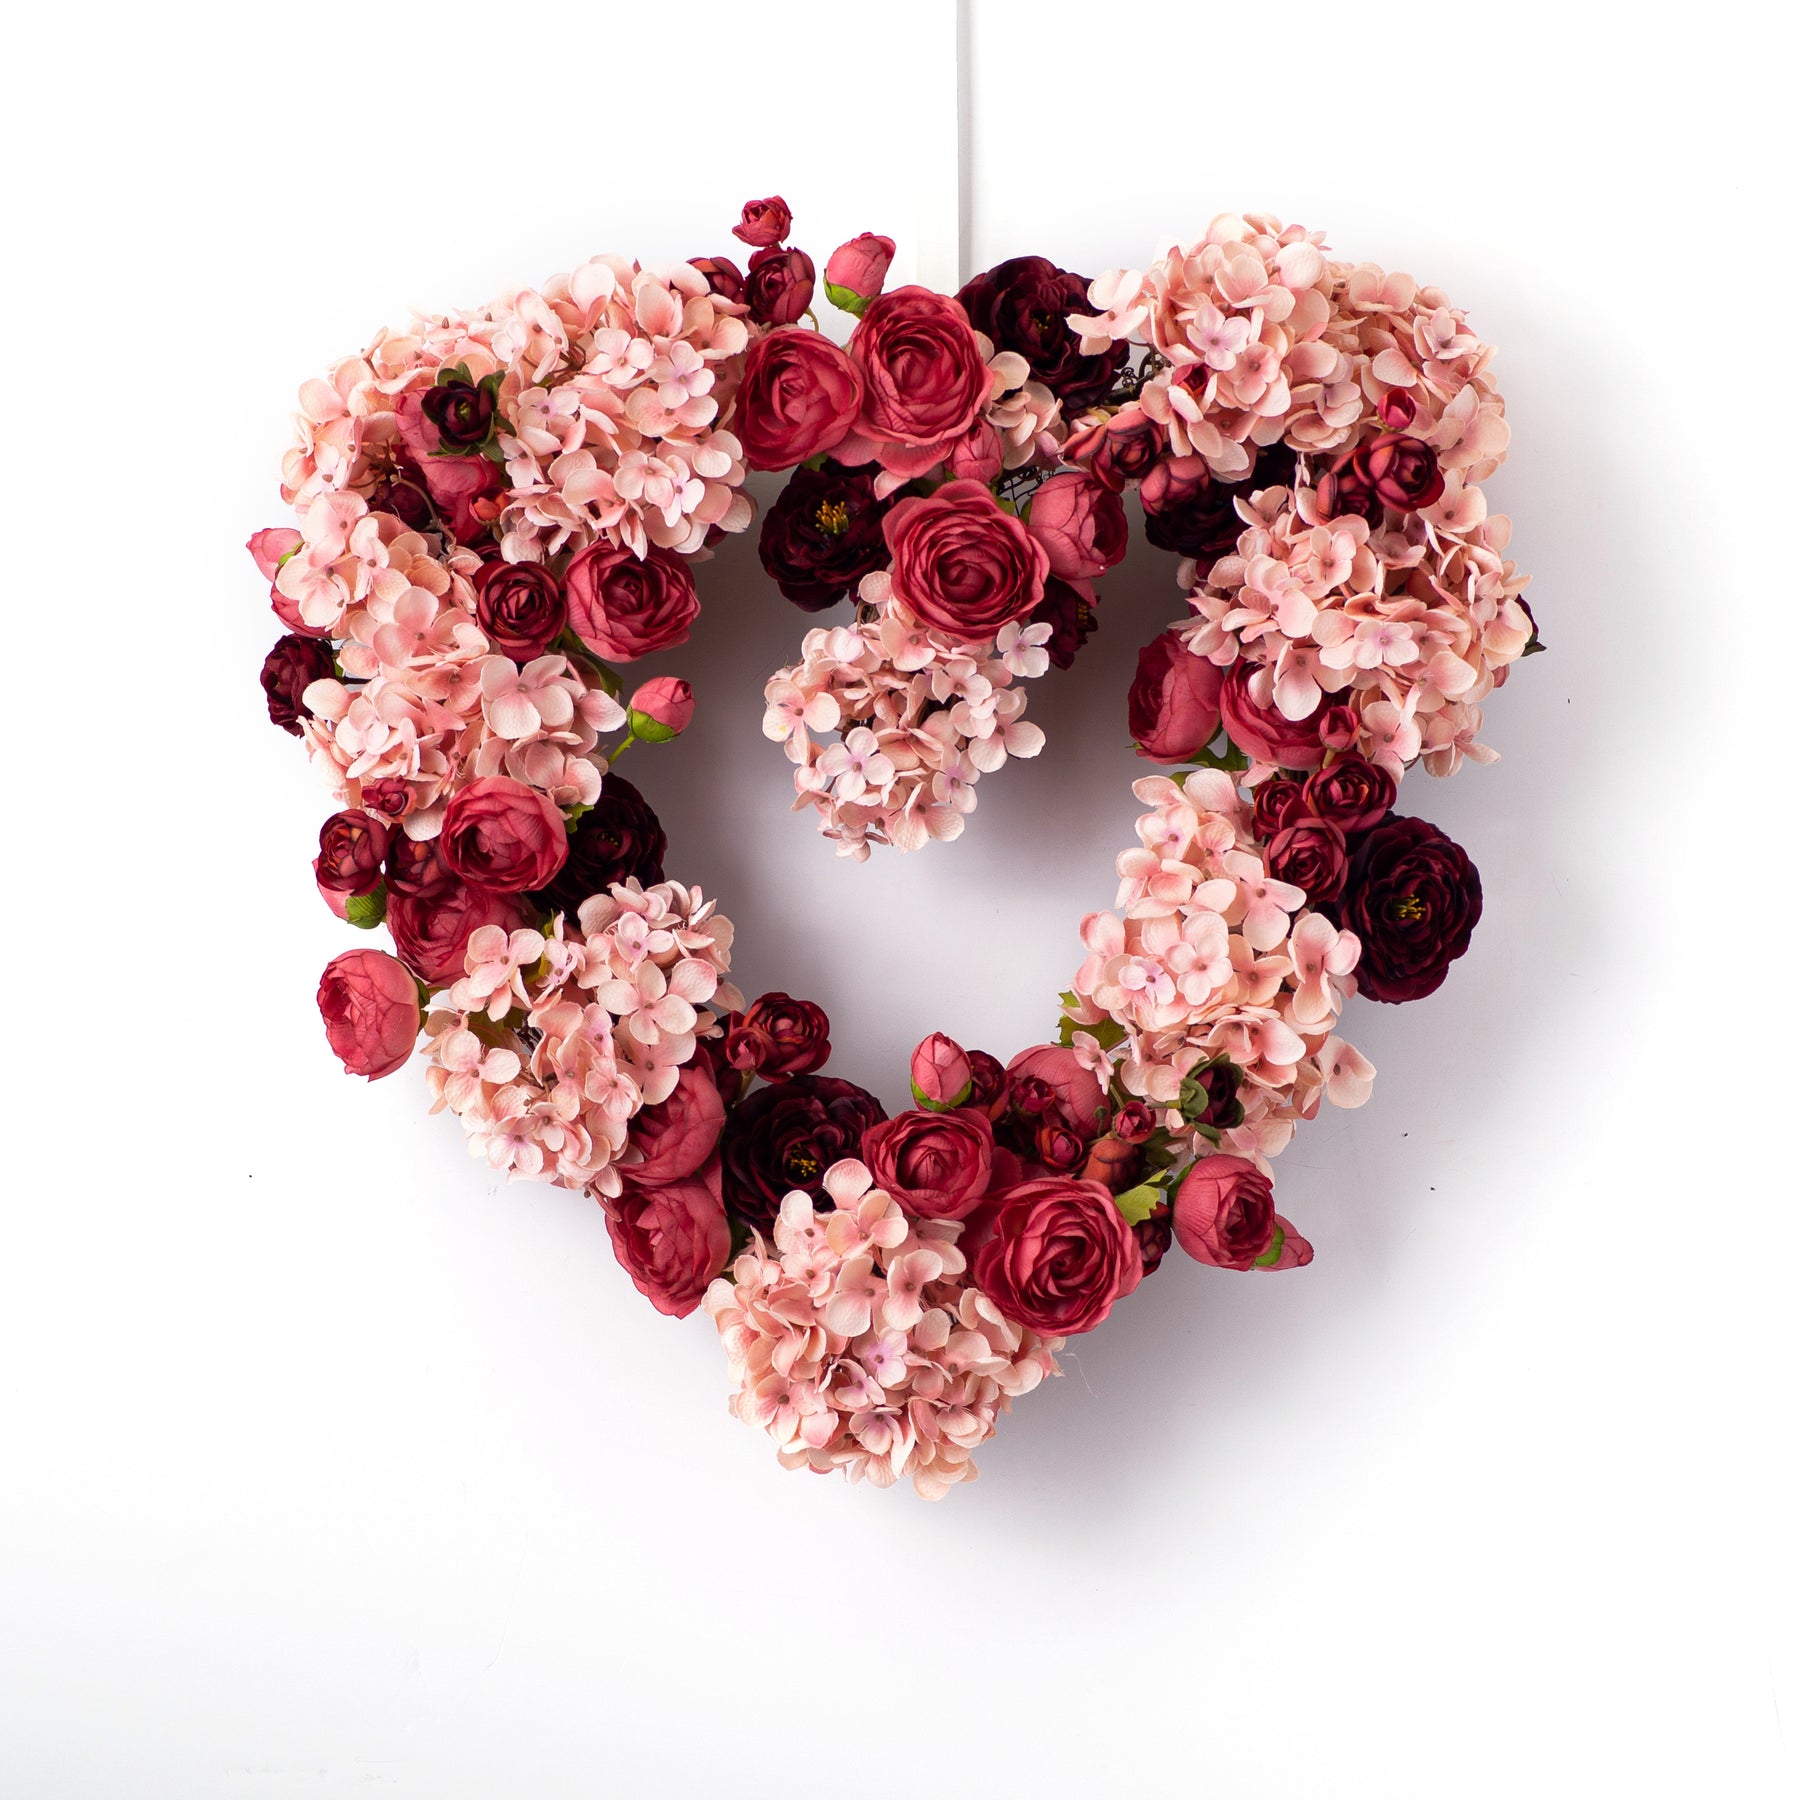 Dried hydrangea heart for Valentine's Day - Cloverhome